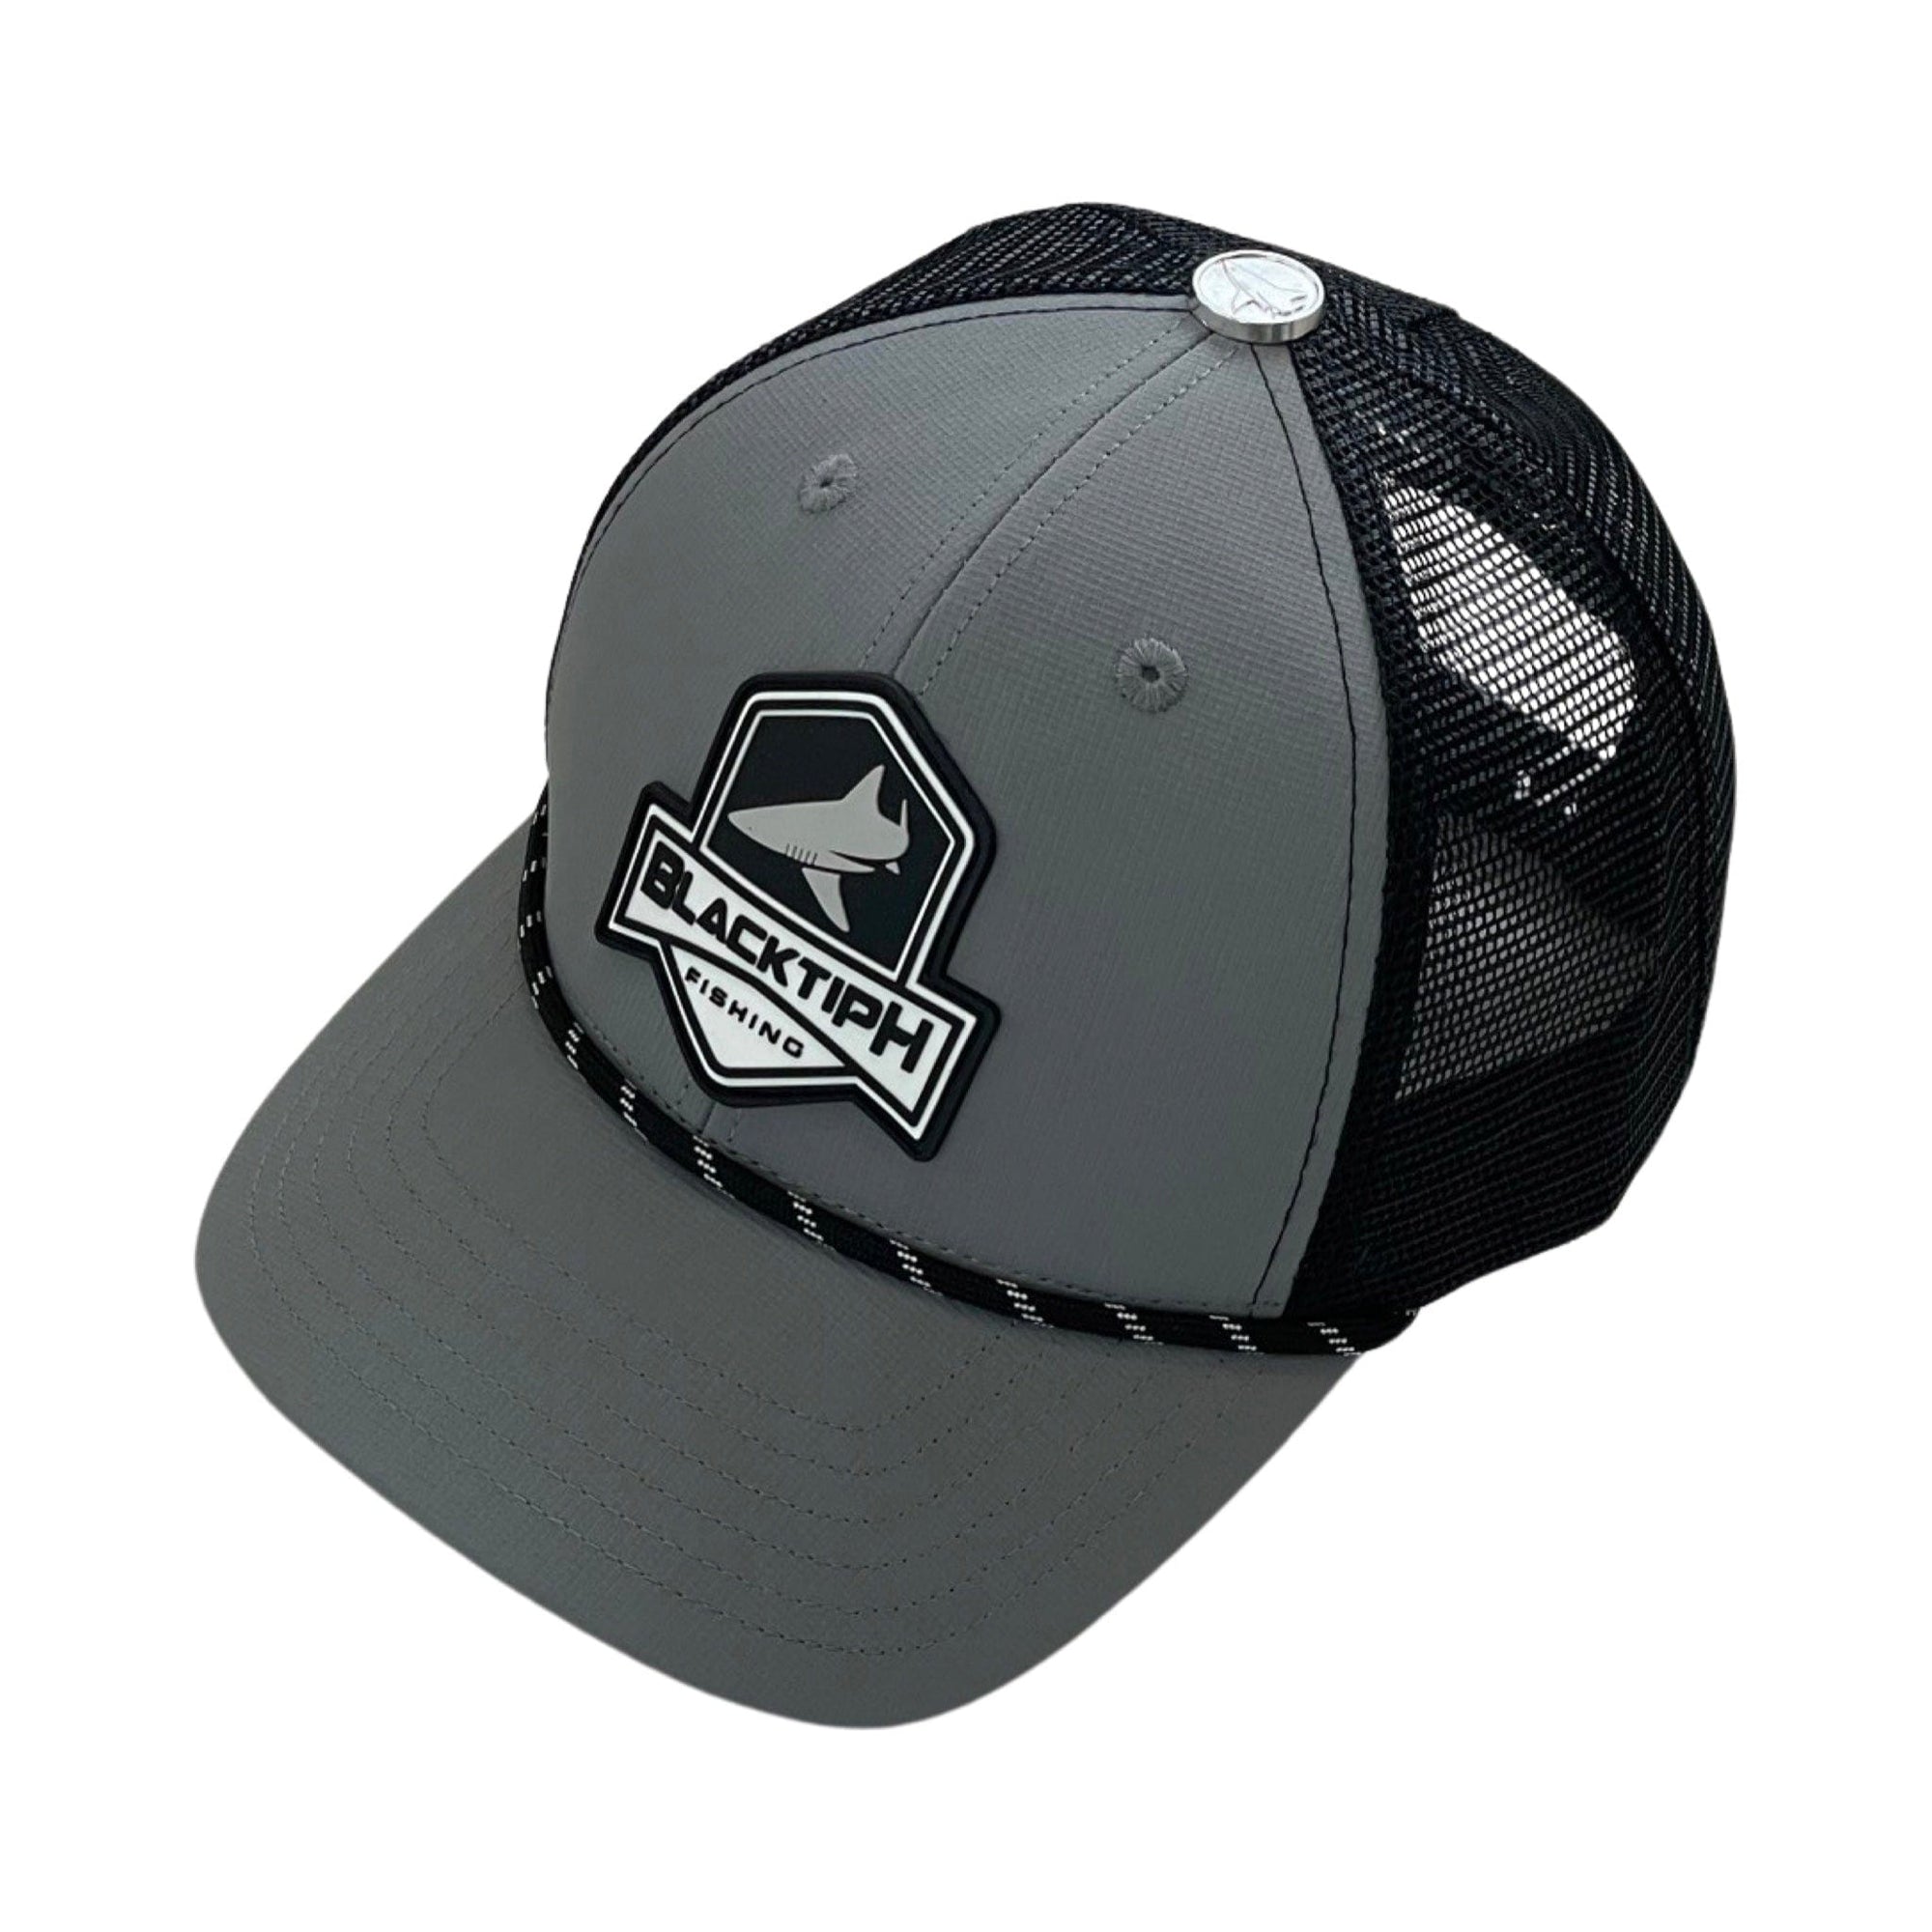 BlacktipH Hats BlacktipH Performance PVC Hat - Grey